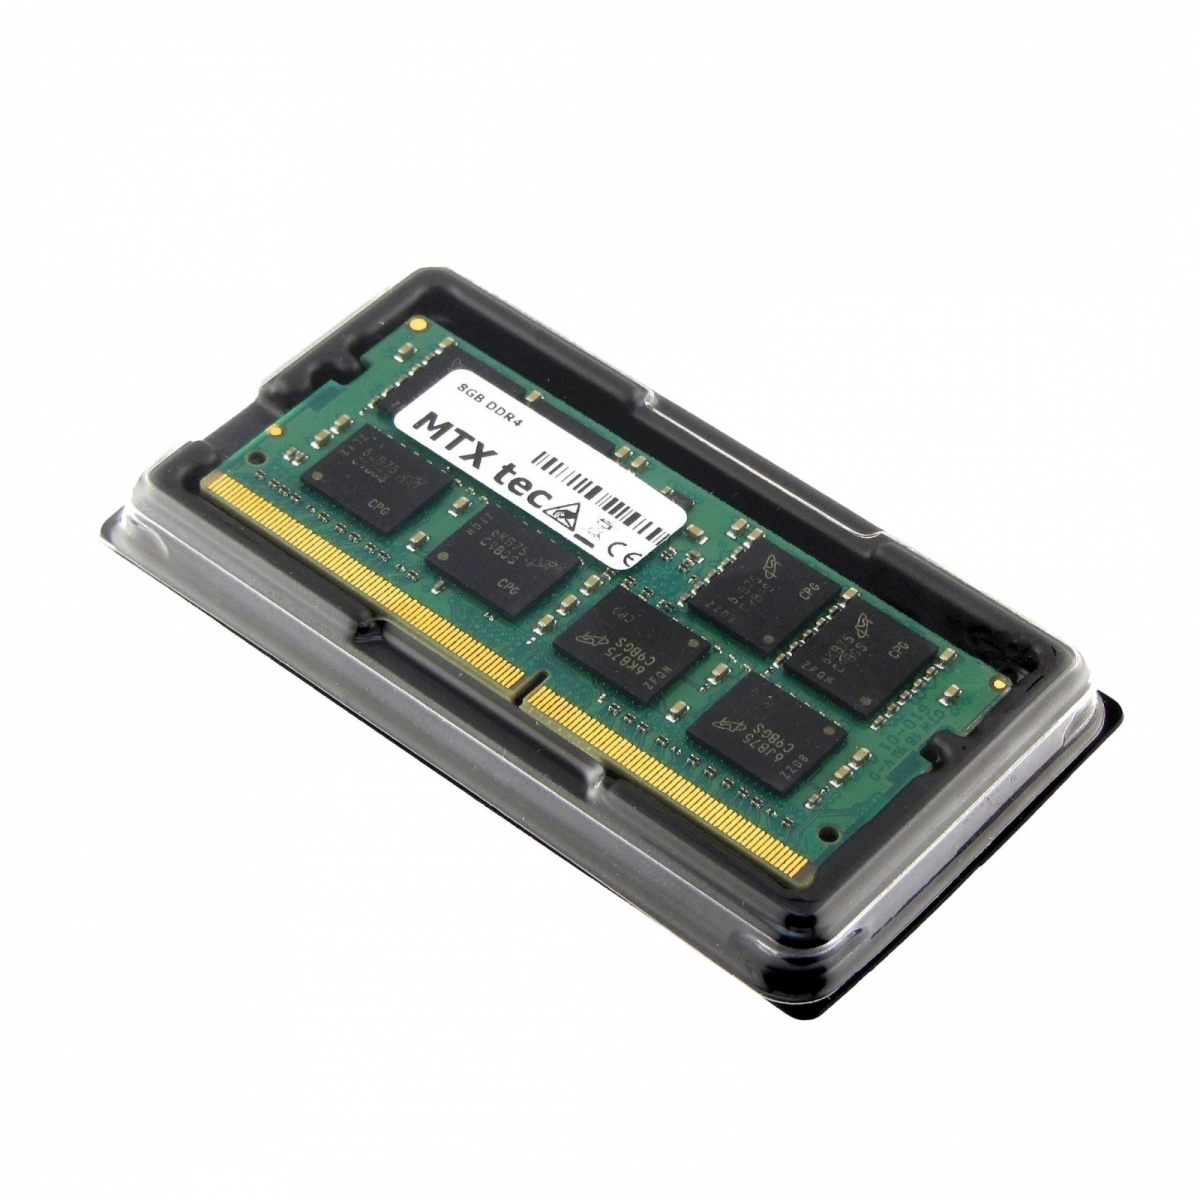 MTXtec Arbeitsspeicher 8 GB RAM für LENOVO ThinkPad T580 20L9, 20LA